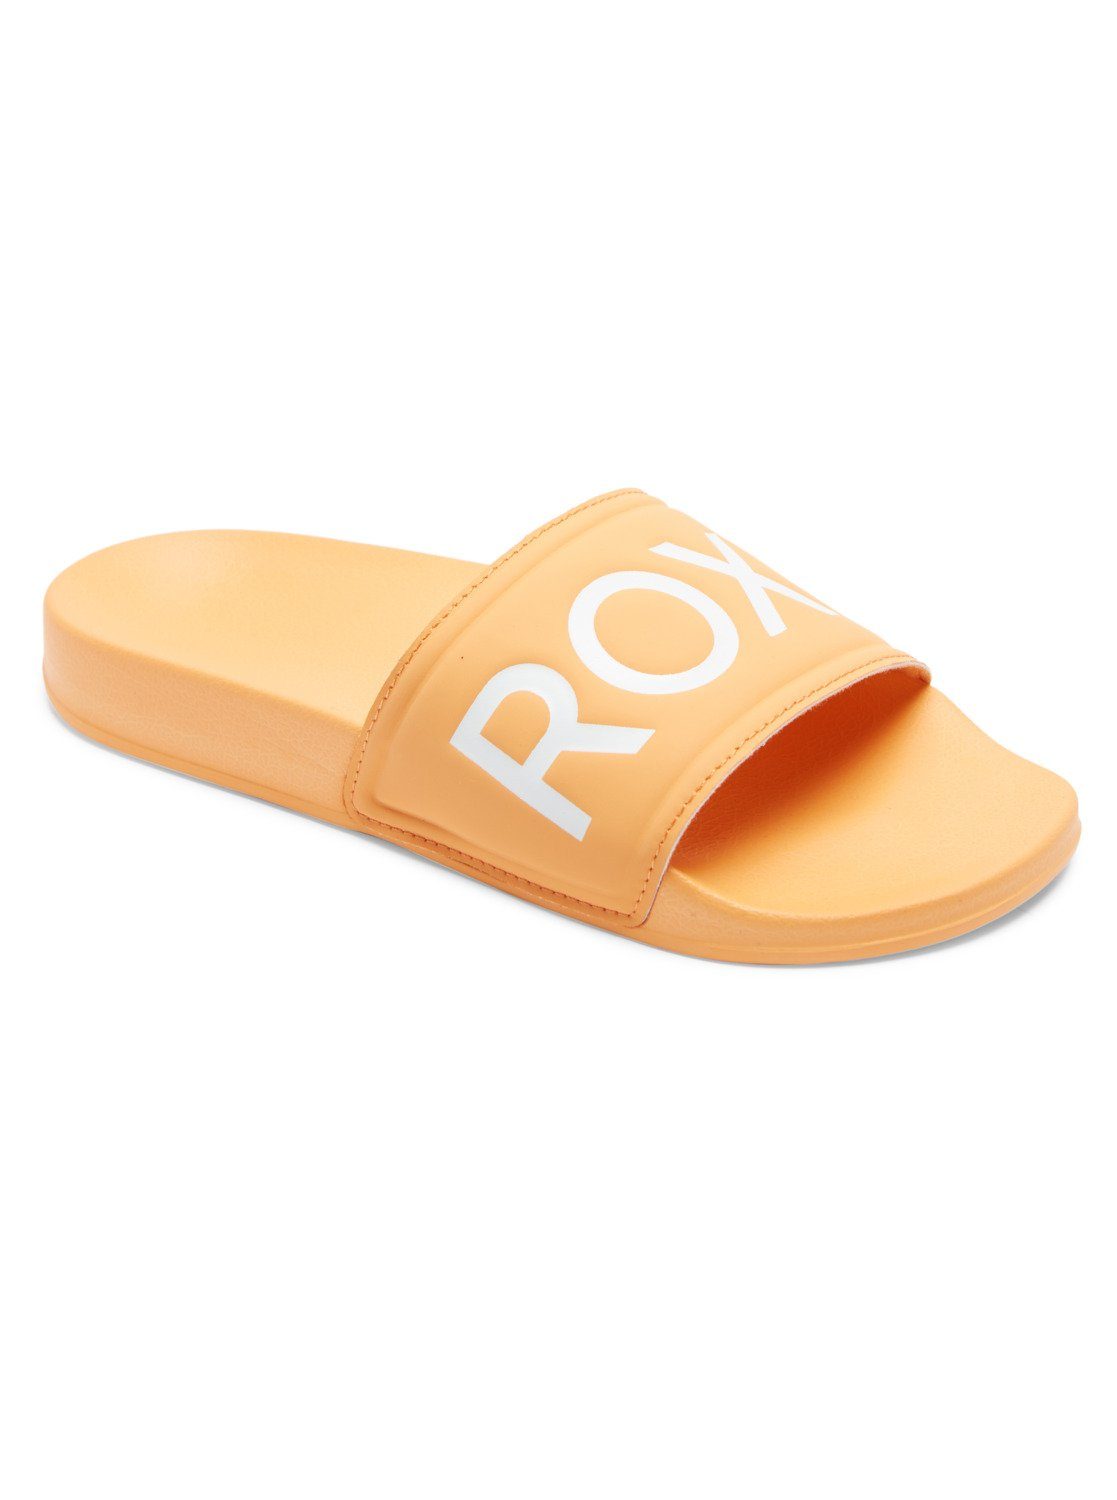 Roxy Slippy Sandale Classic Orange | Riemchensandalen